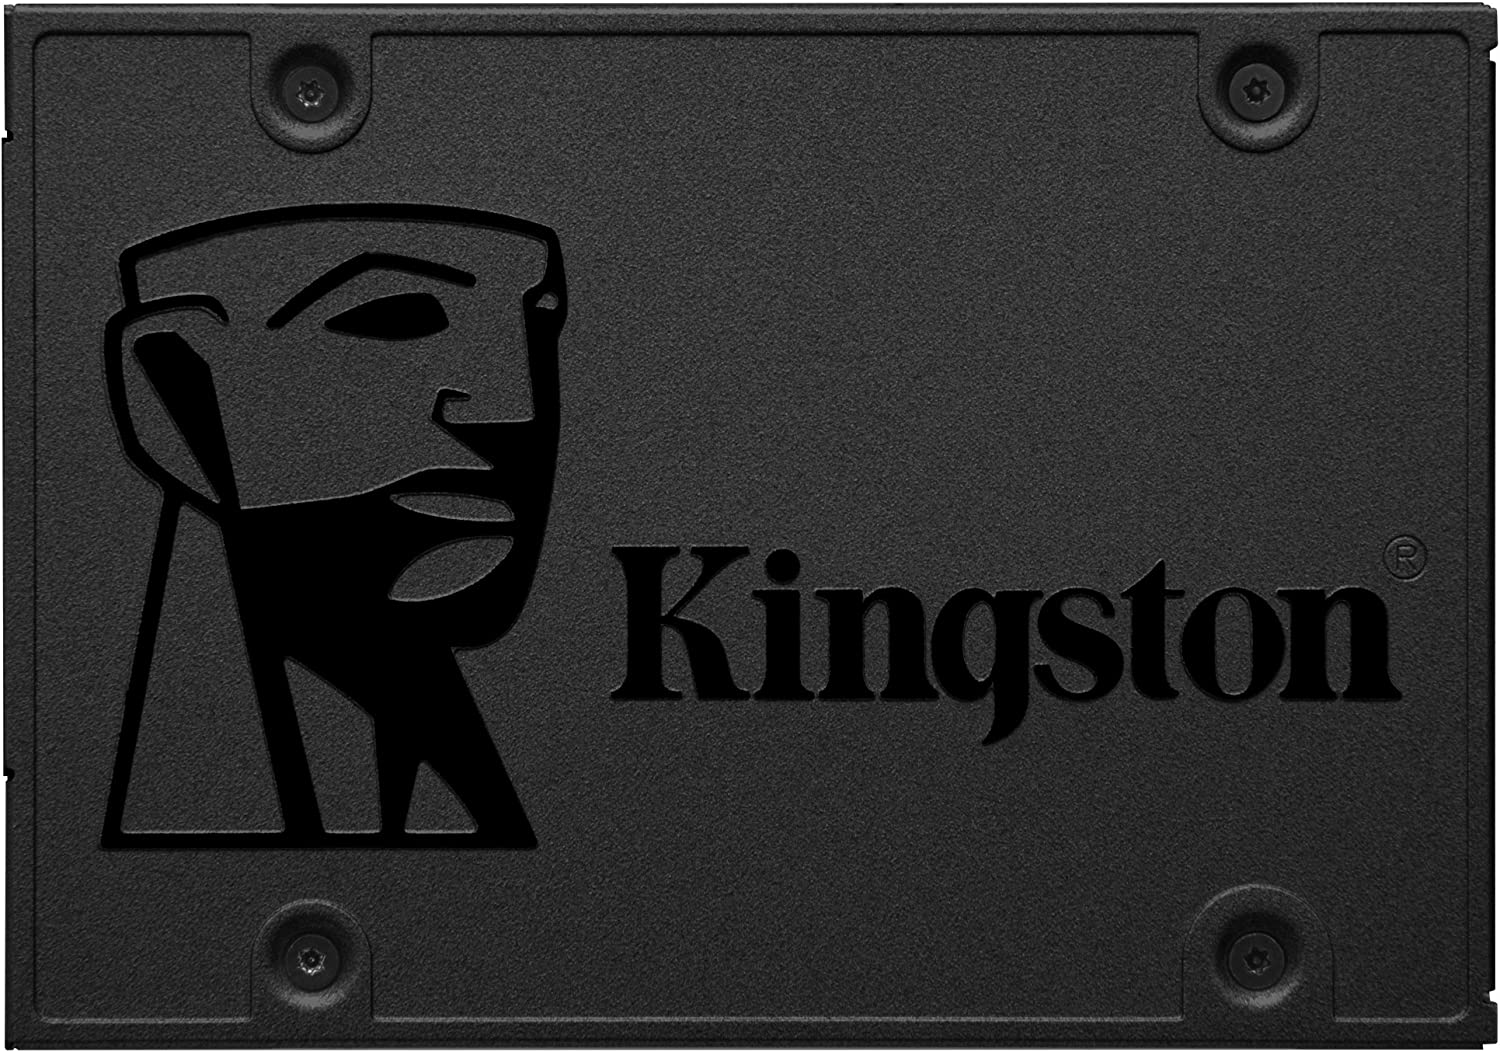 Kingston A400 SSD 480GB